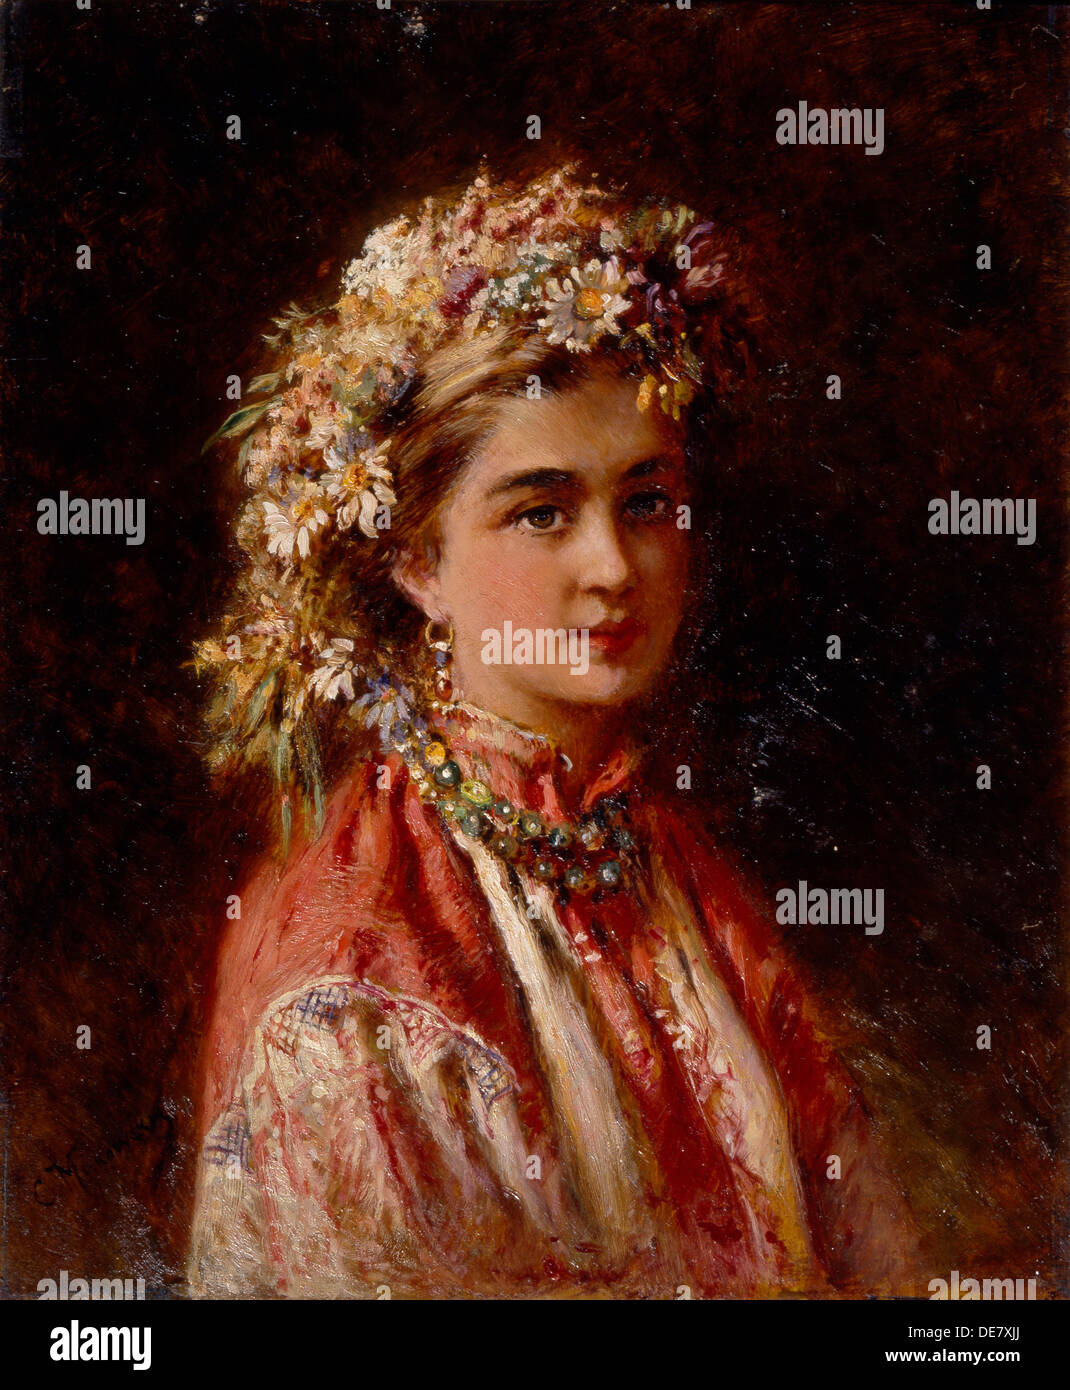 Jeune fille à la guirlande de fleurs. Artiste : Makovsky, Konstantin Yegorovich (1839-1915) Banque D'Images